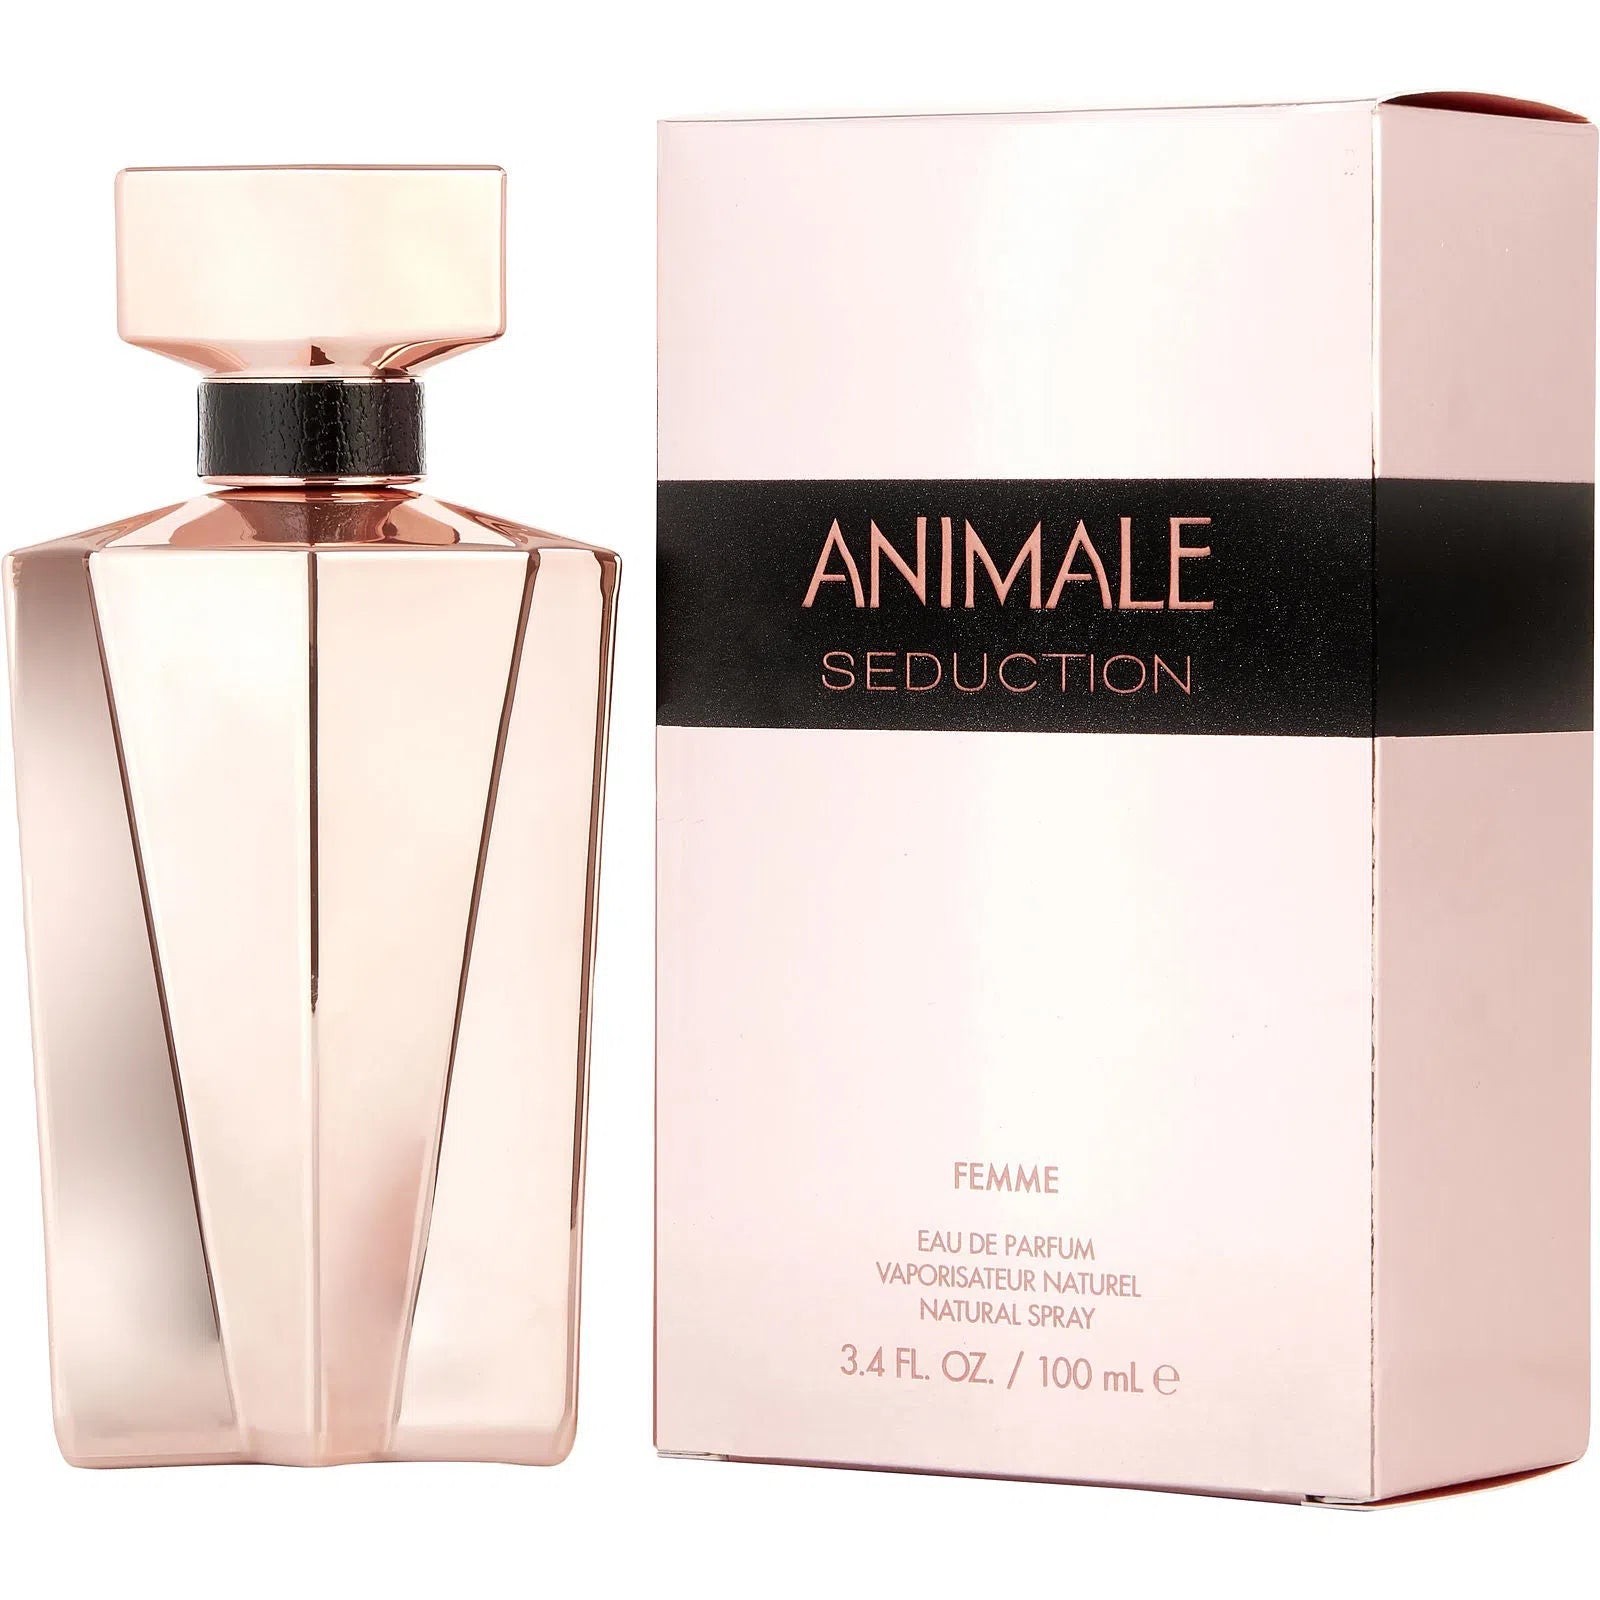 Perfume Animale Seduction Femme EDP (W) / 100 ml - 878813000063- Prive Perfumes Honduras